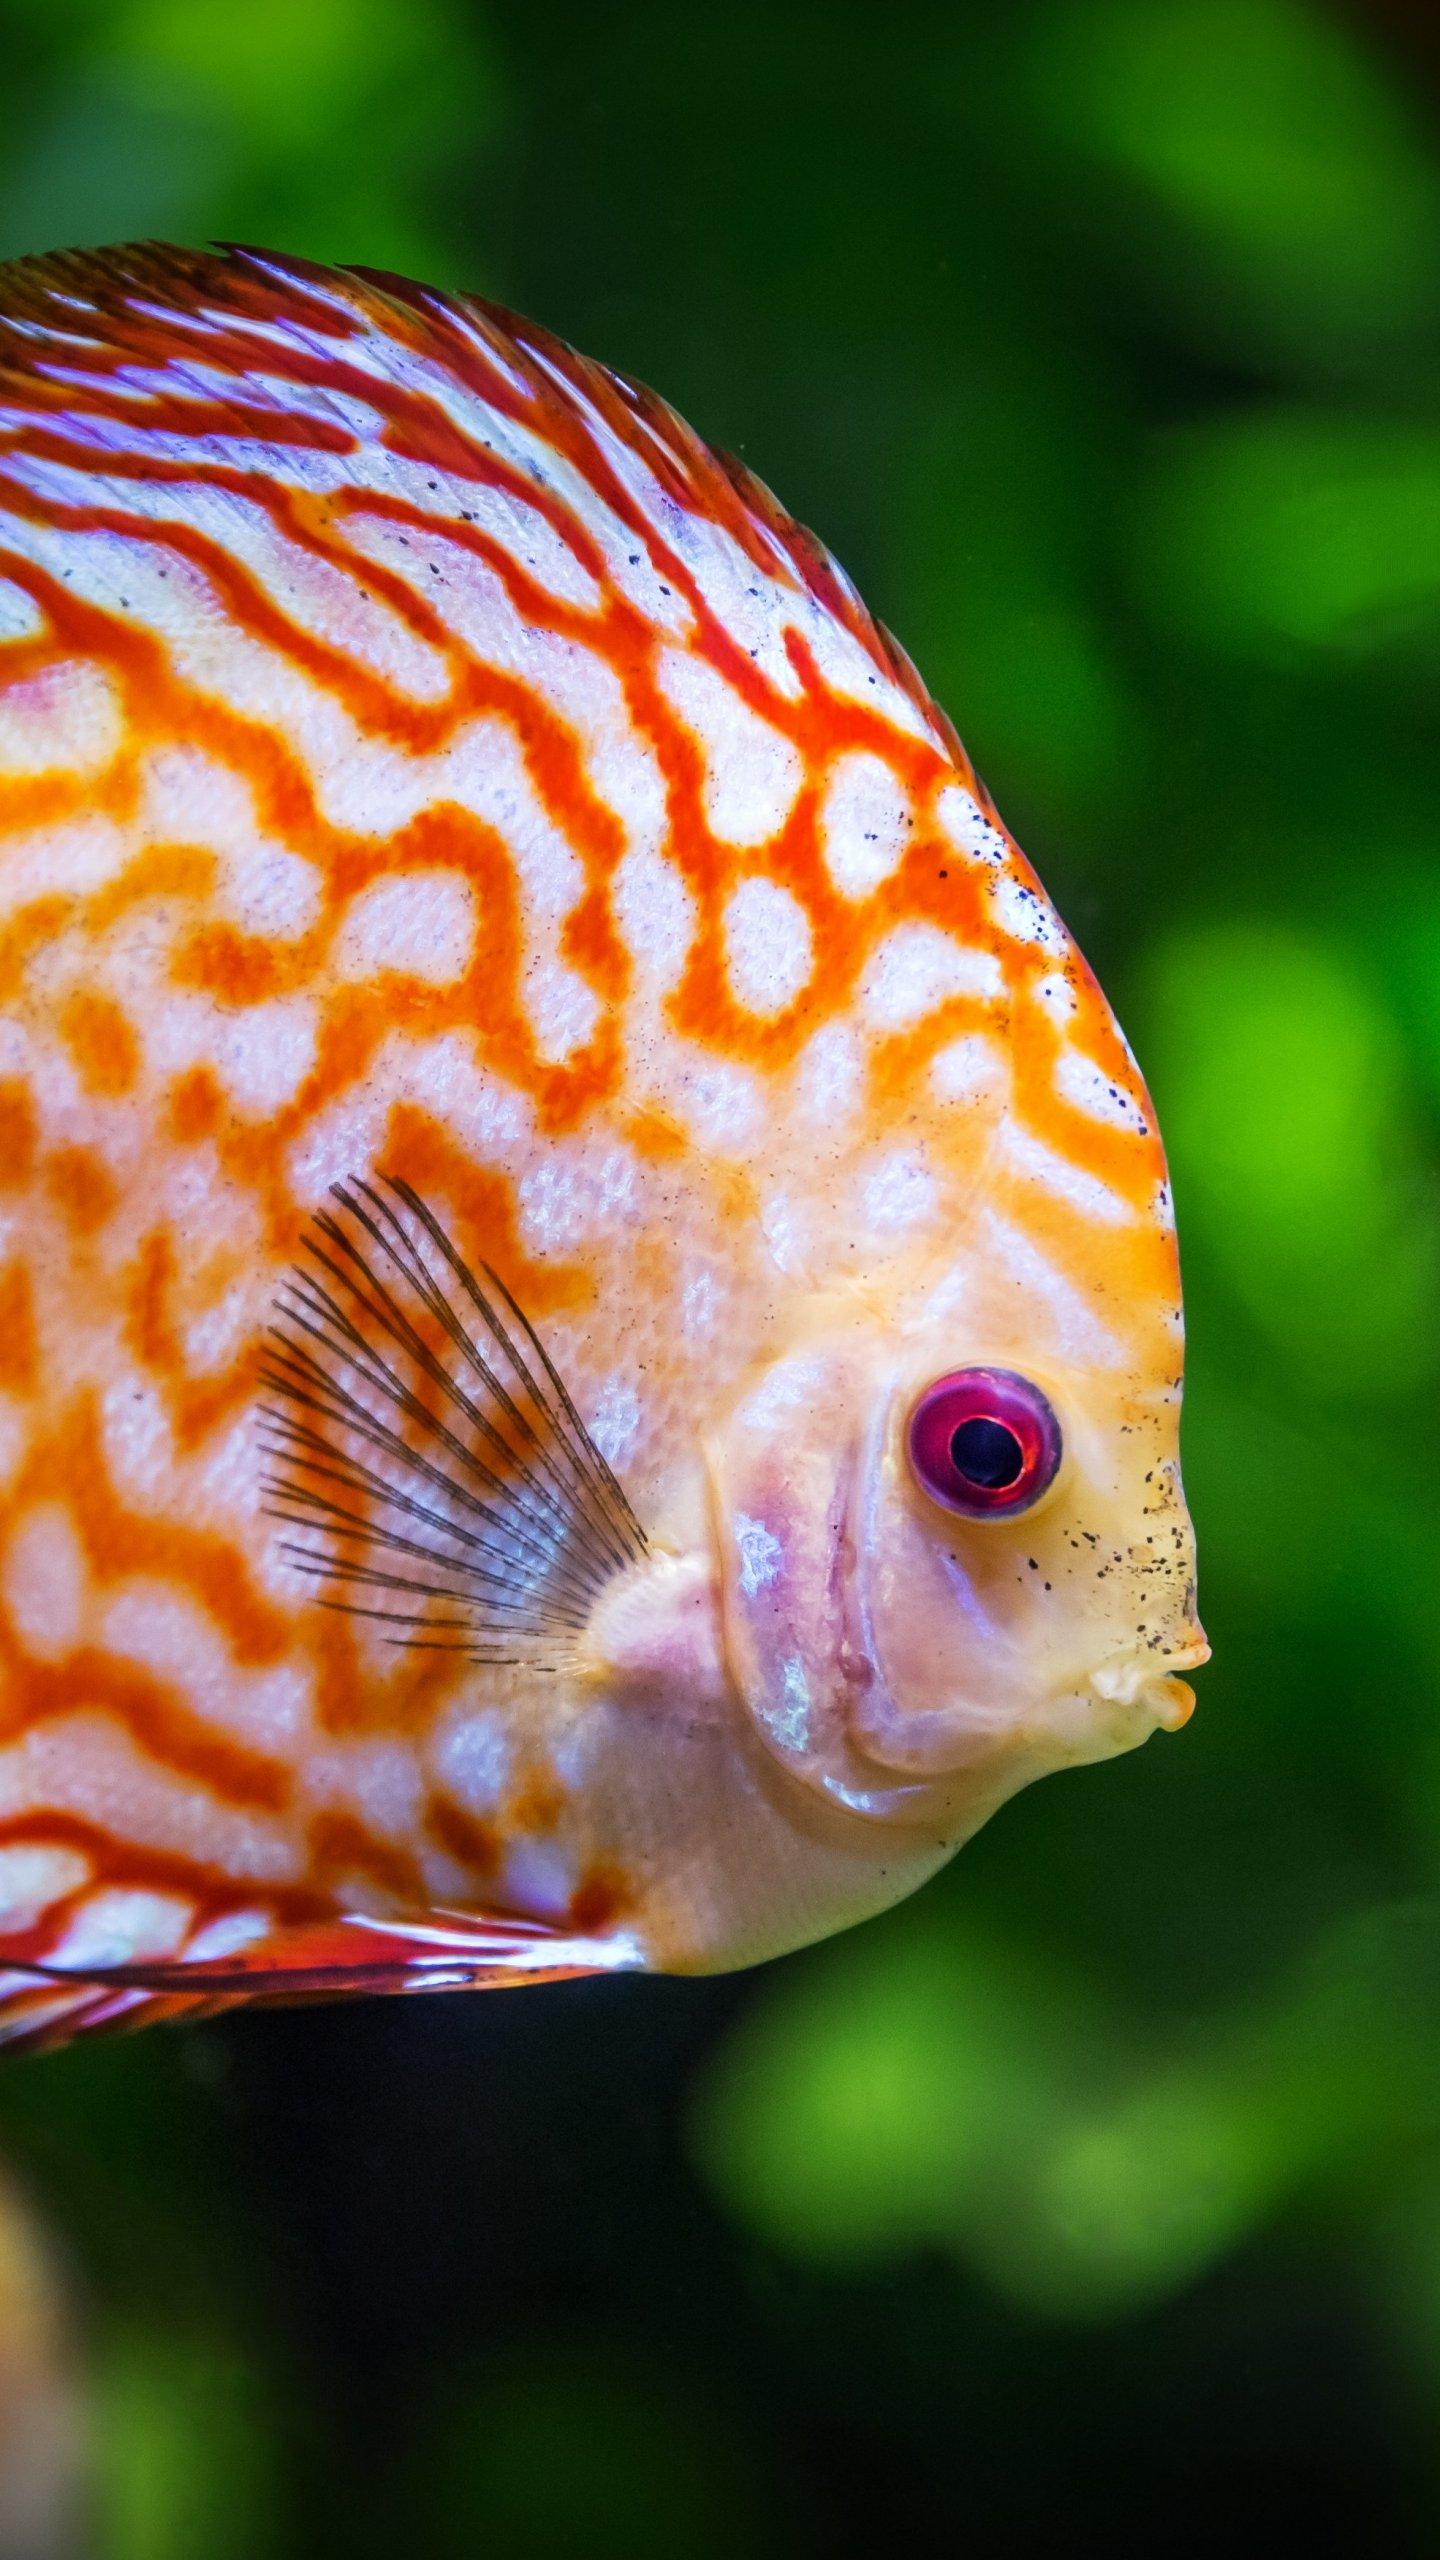 Discus Fish Underwater Wallpaper, Android & Desktop